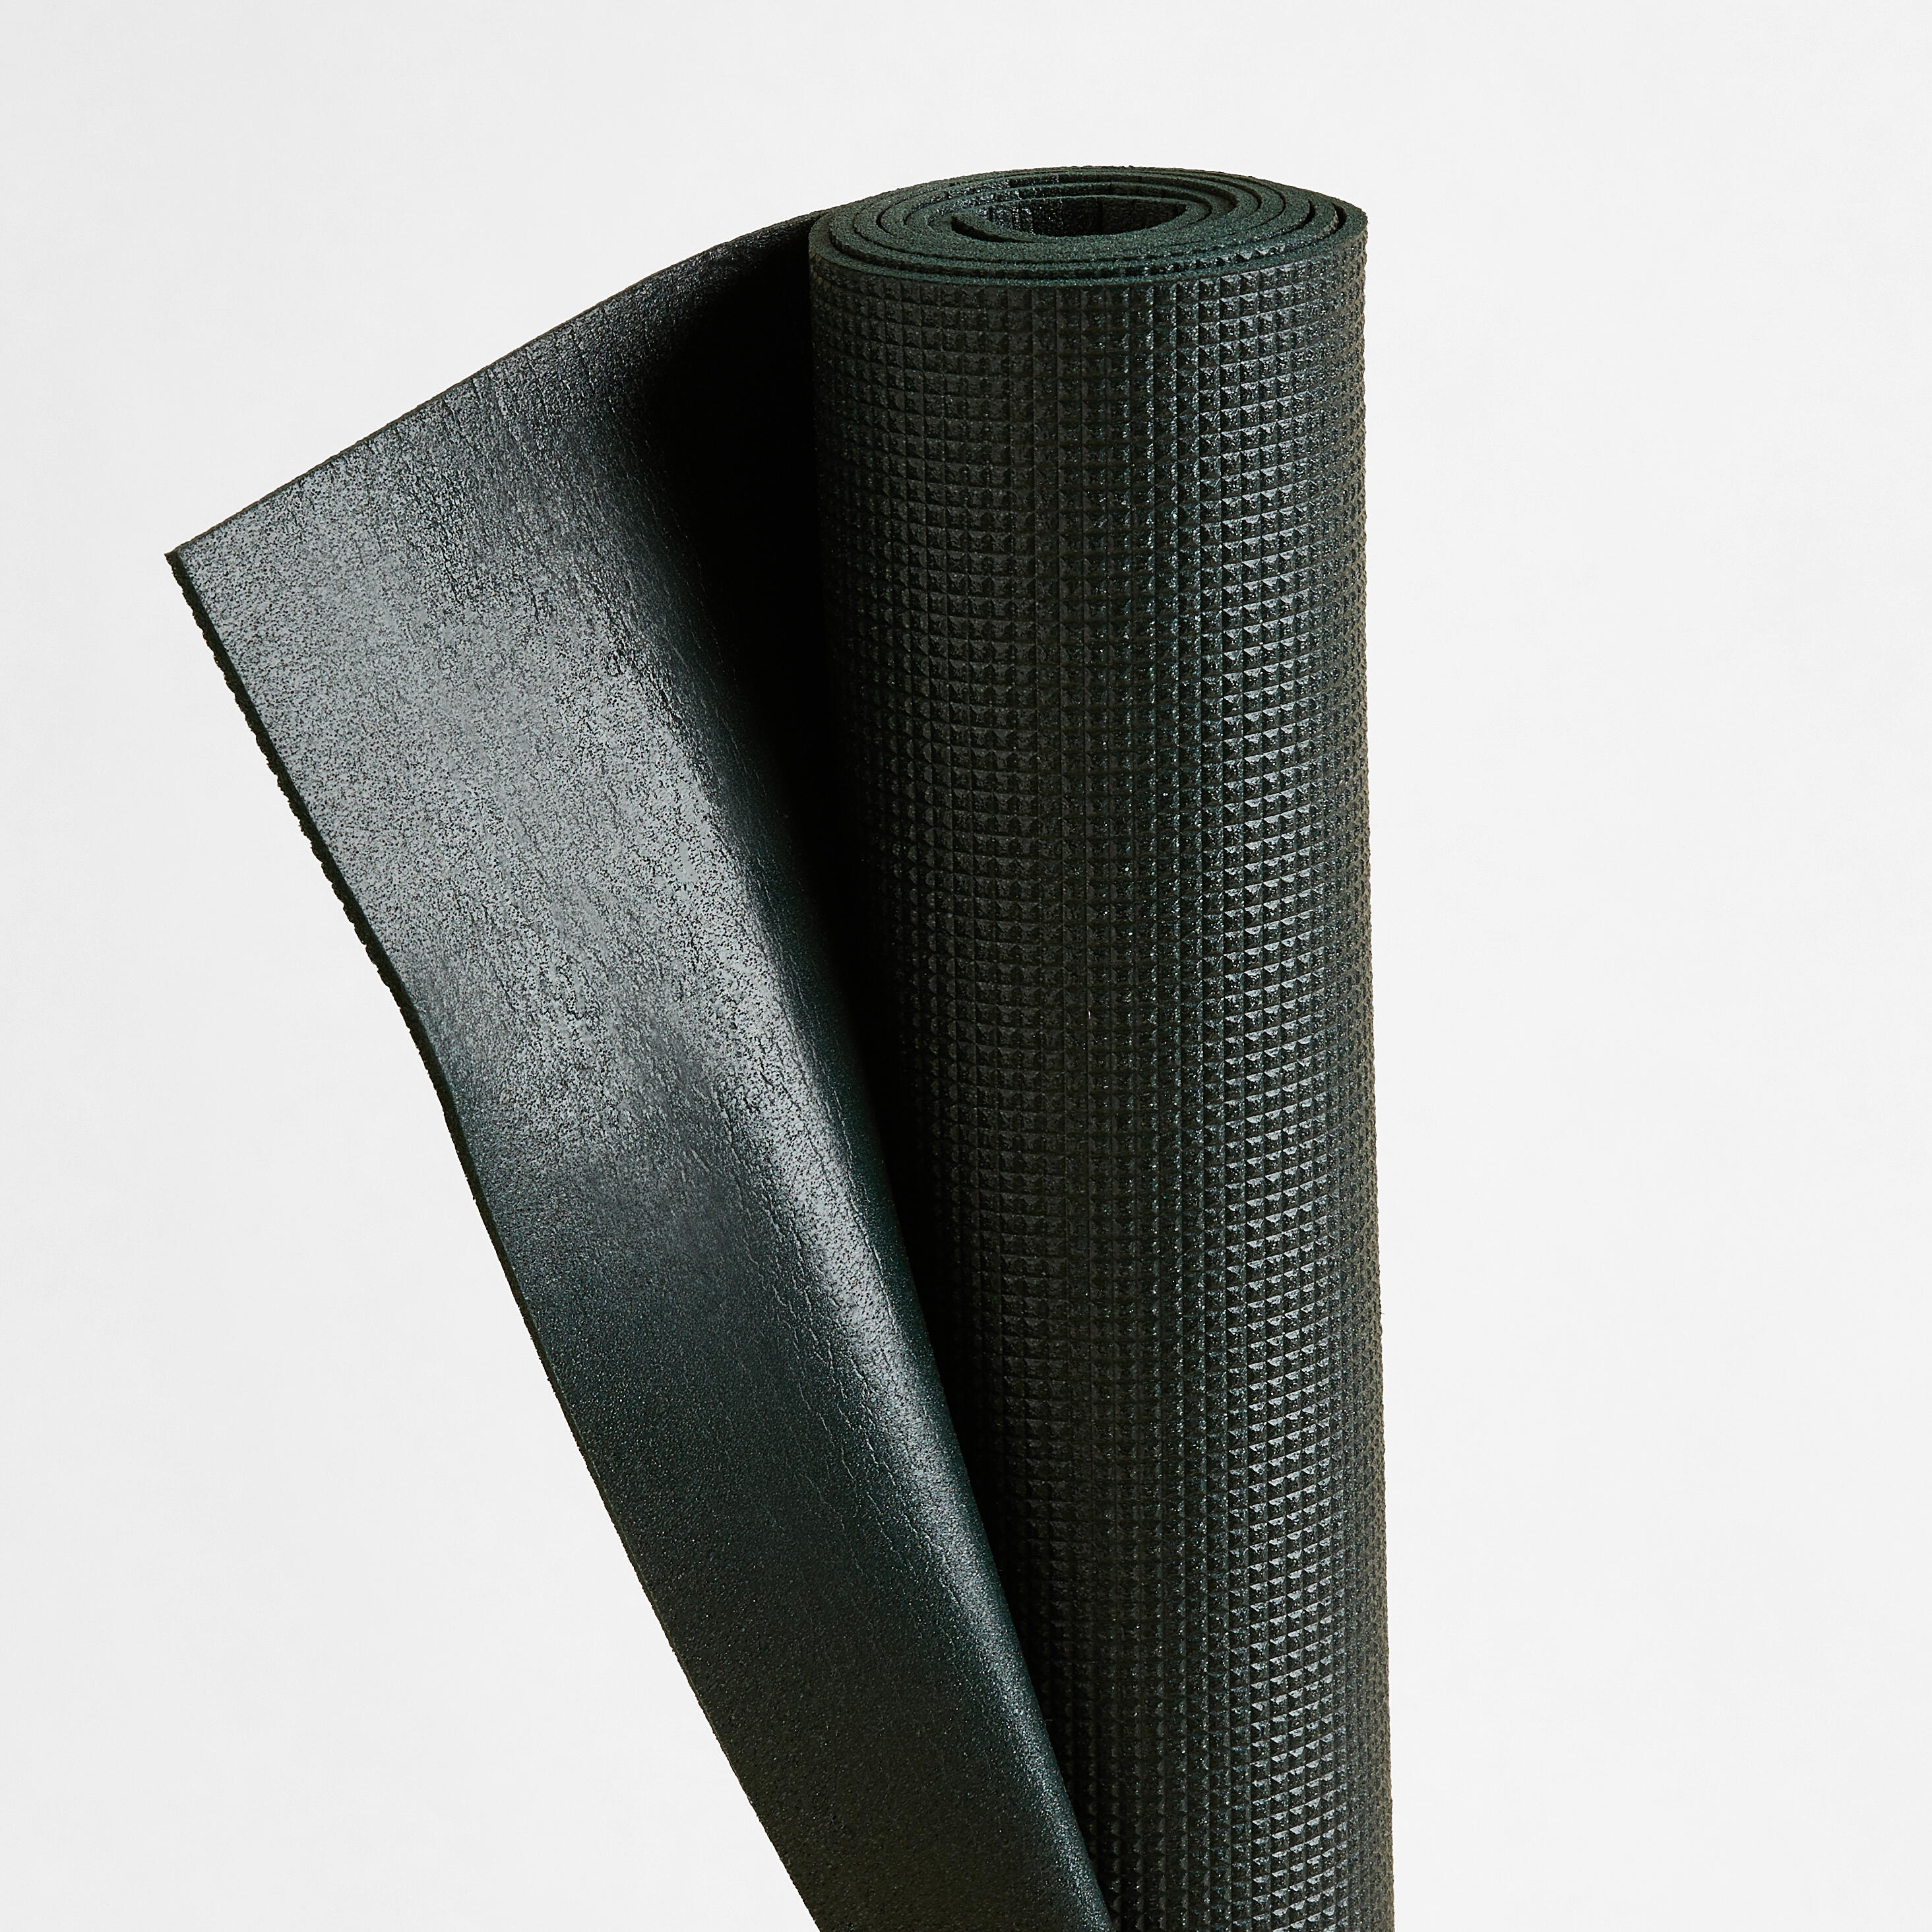 185 x 65 cm x 5 mm Yoga Mat Grip - Grey - Decathlon